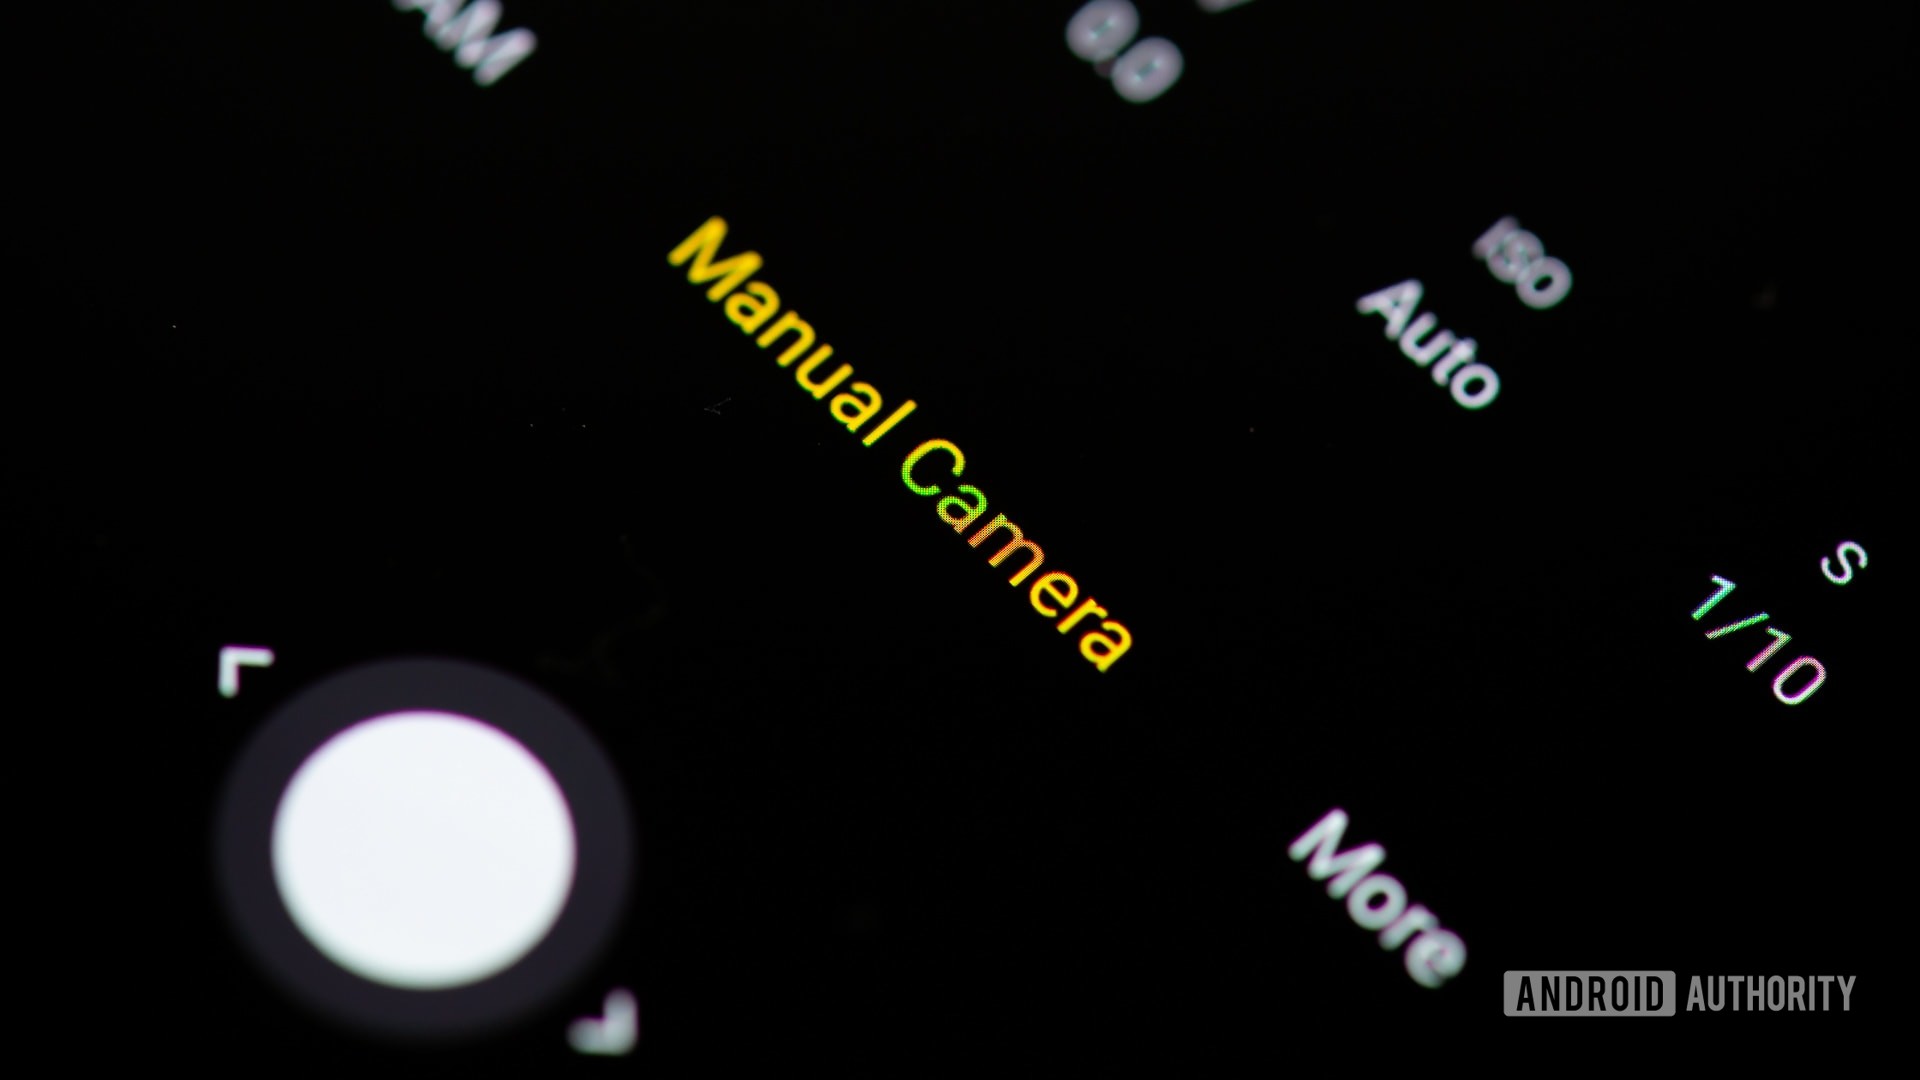 Manual mode camera app. 